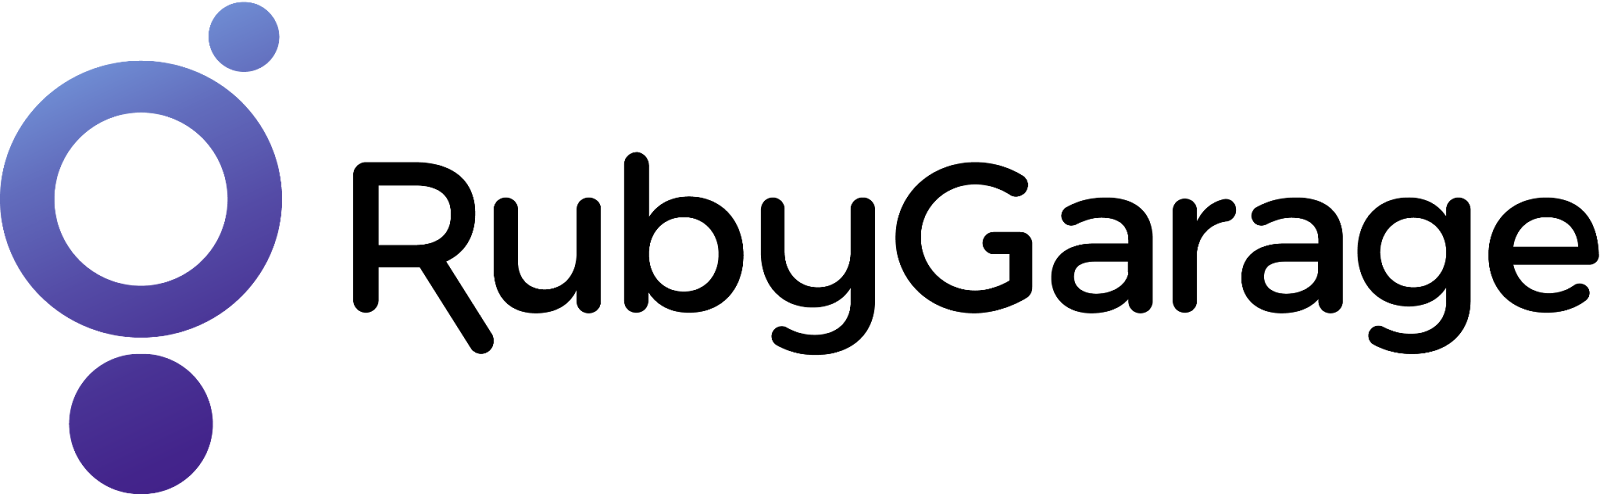 rubygarage logo blue 